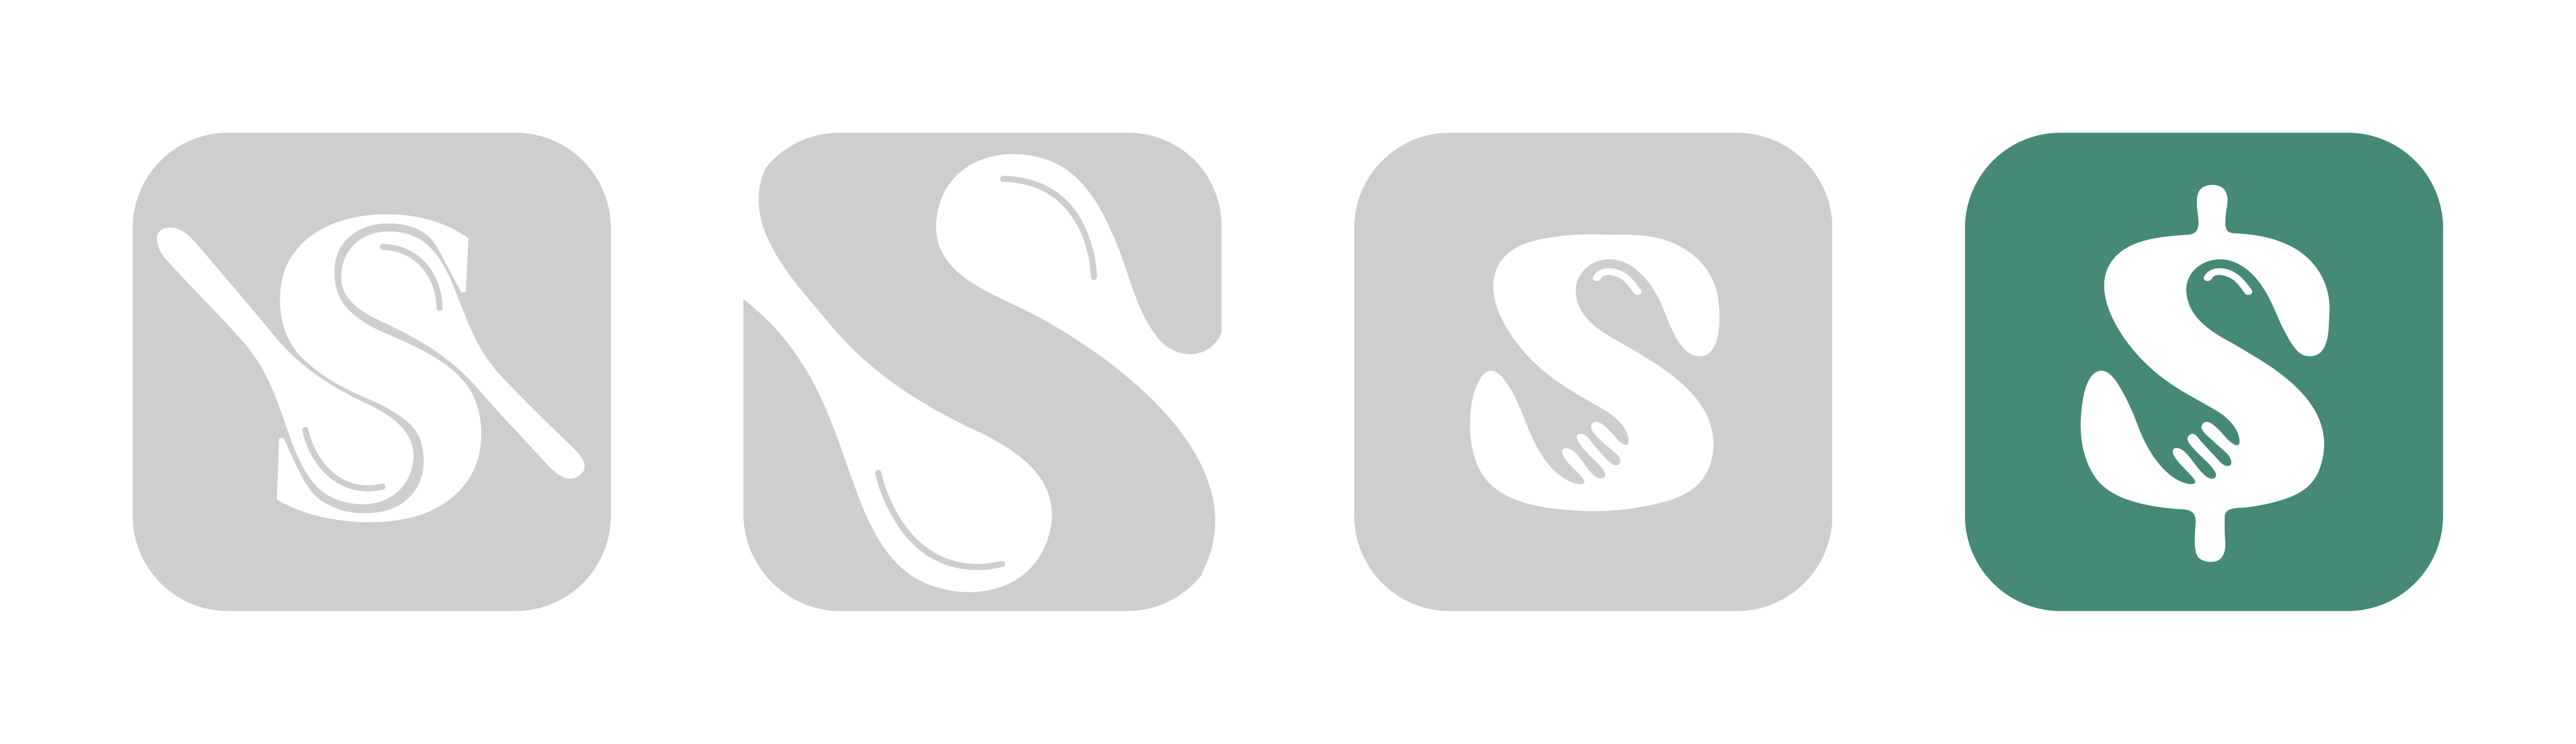 Savery logo ideas